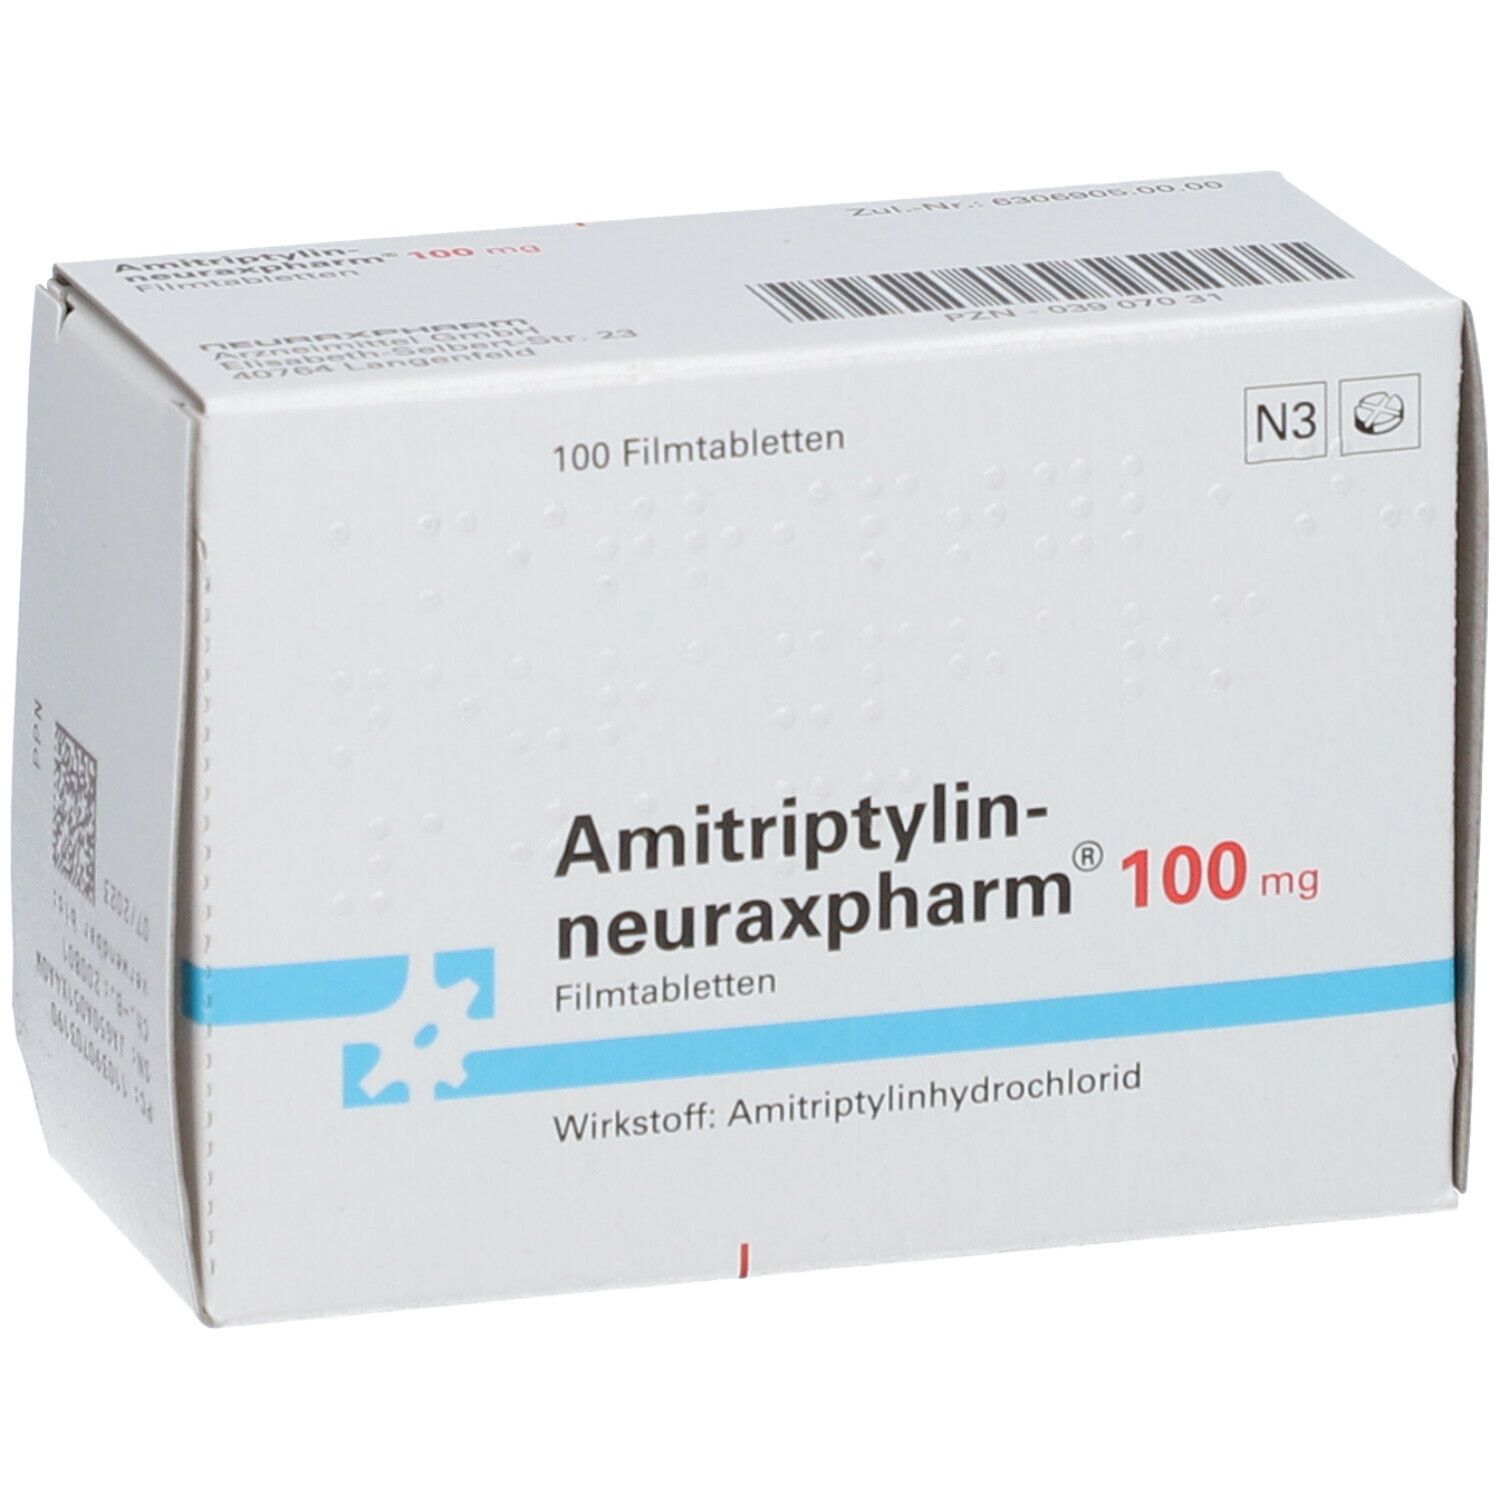 Amitriptylin-neuraxpharm® 100 mg